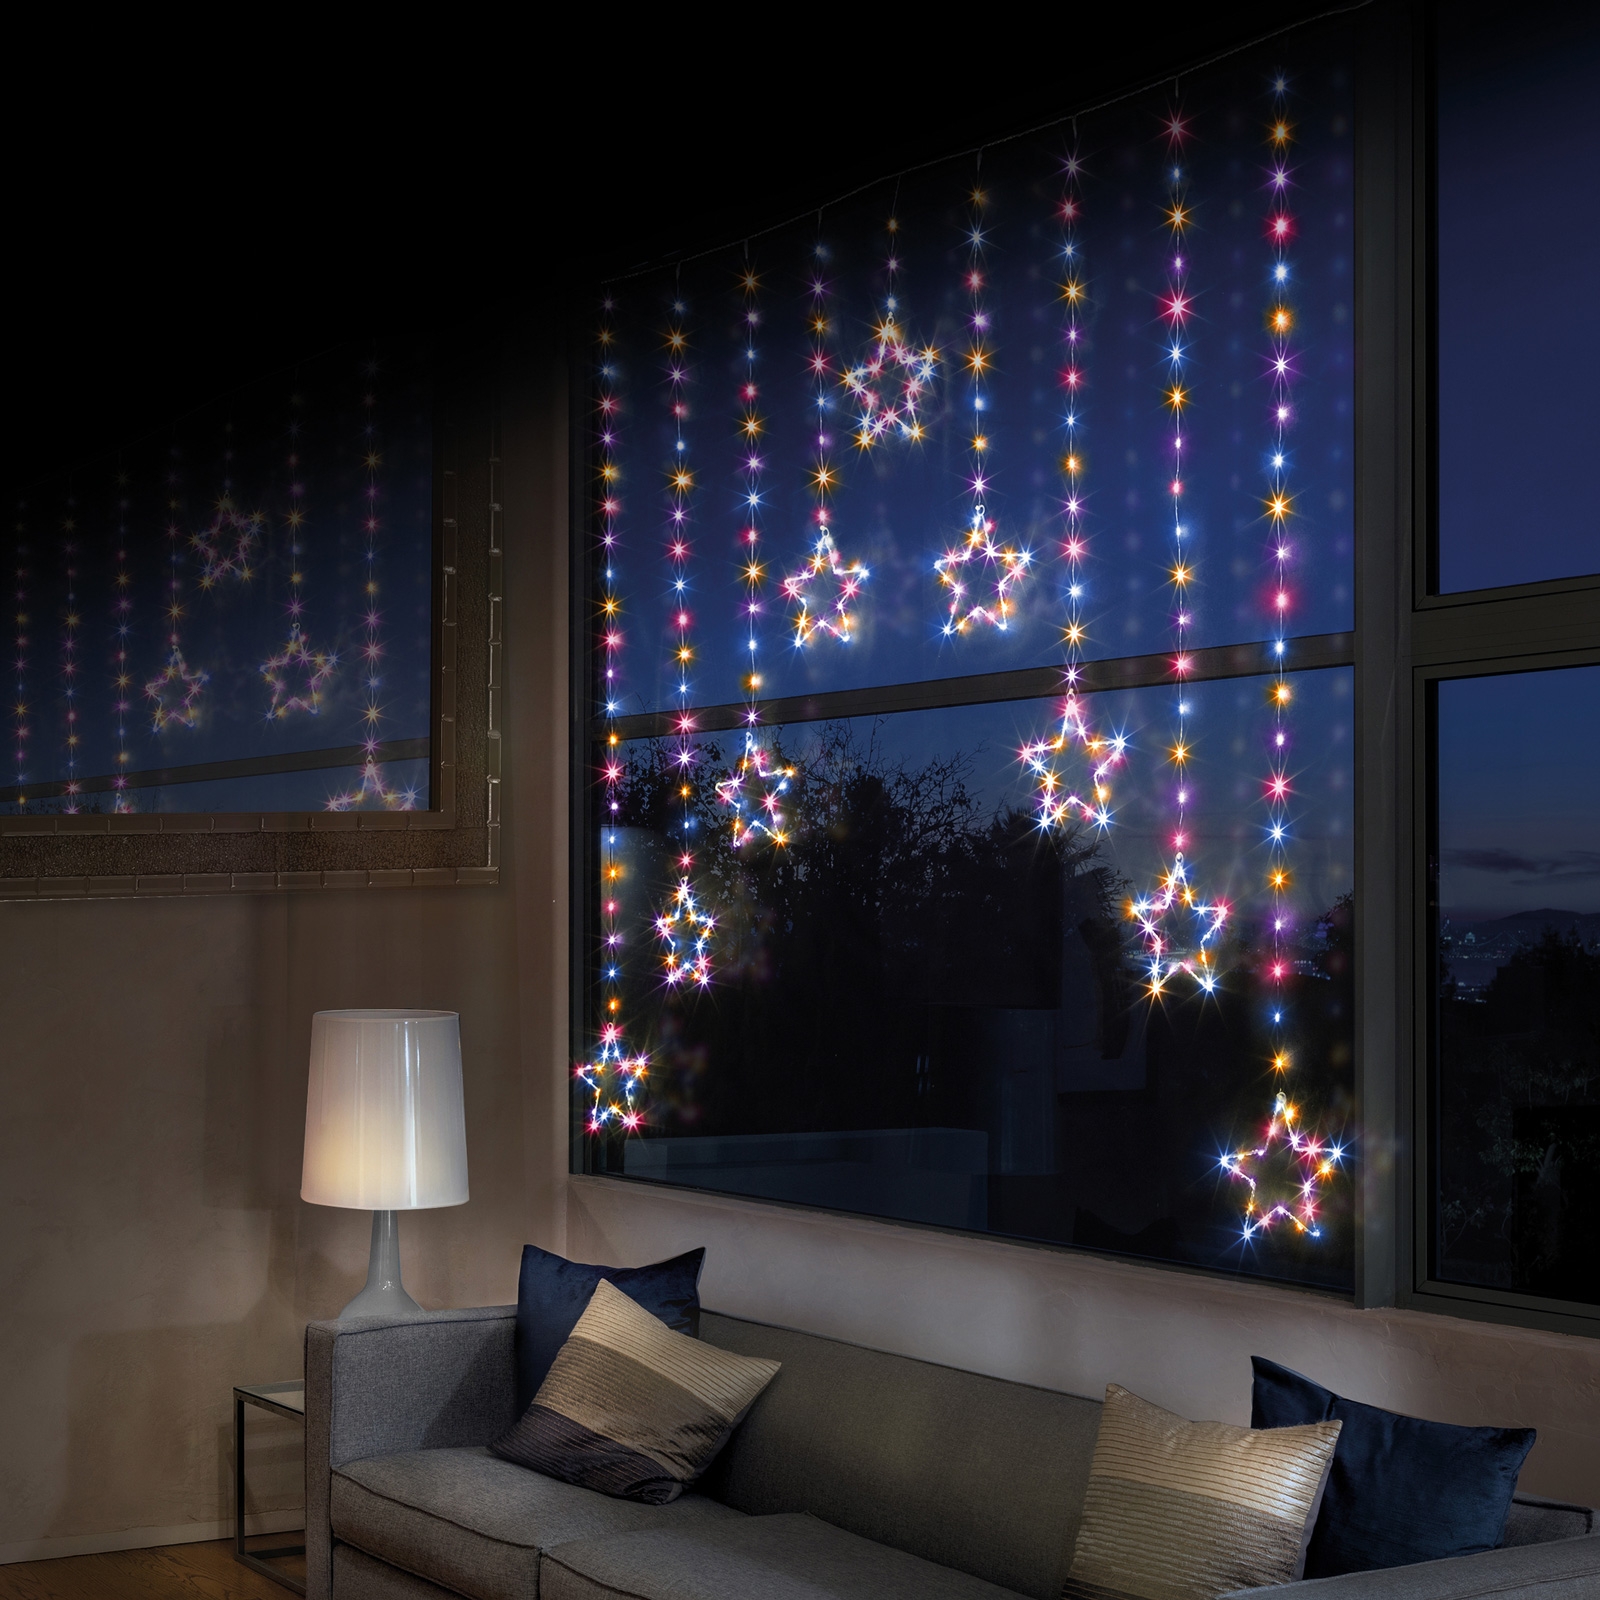 Image of 303 Rainbow LED Star Curtain Light 1.2M x 1.2M